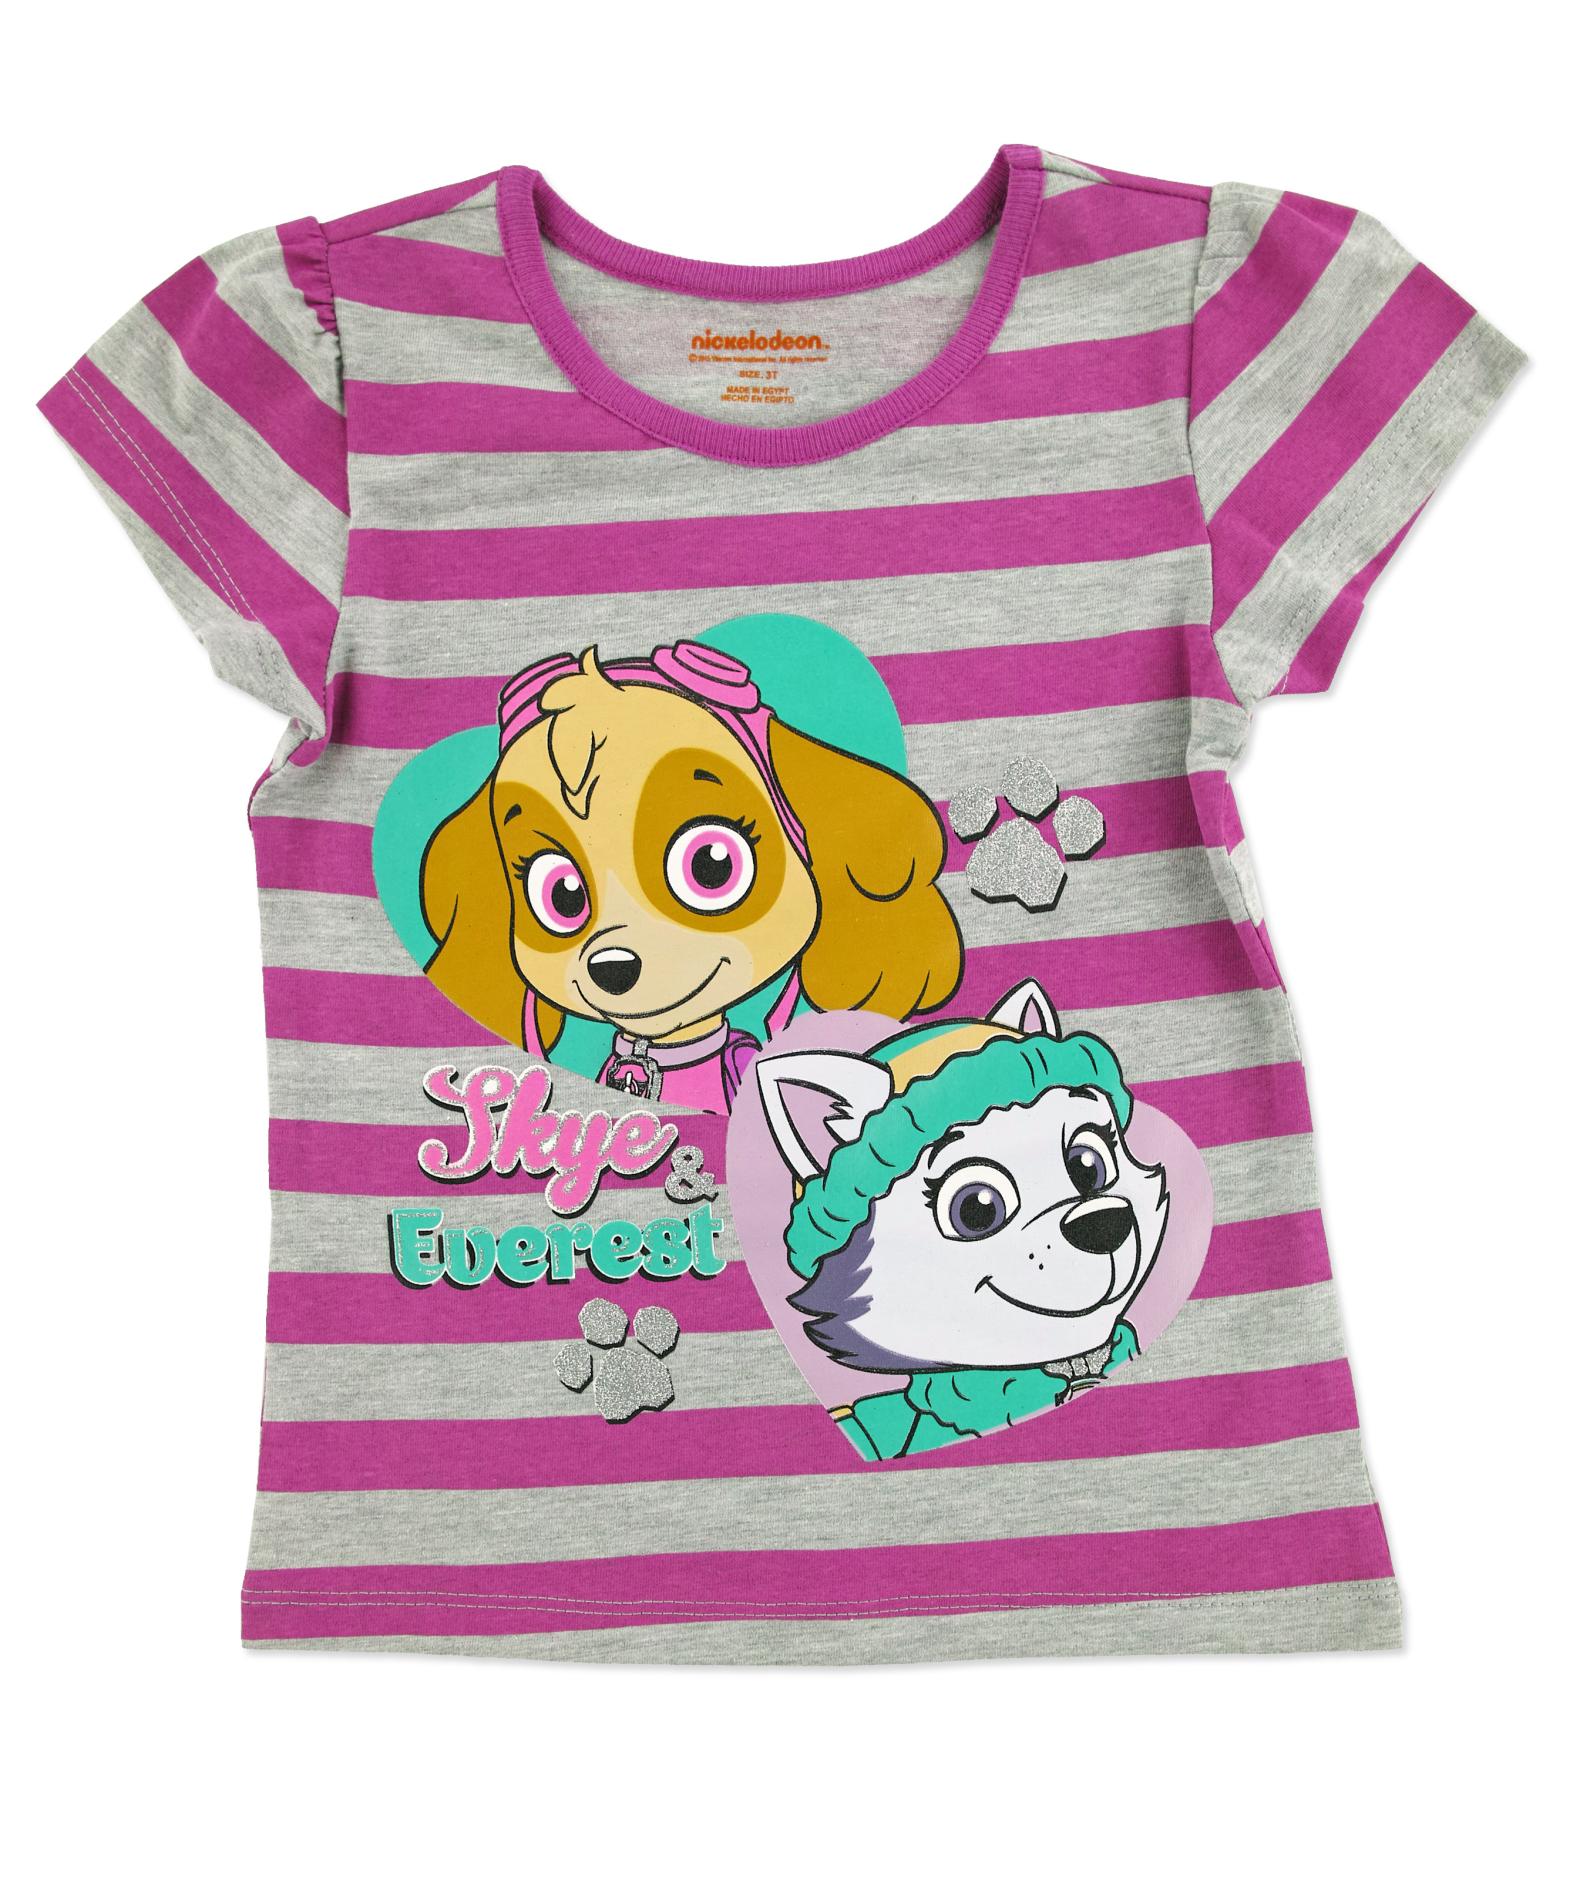 Nickelodeon PAW Patrol Girl's Graphic T-Shirt - Striped